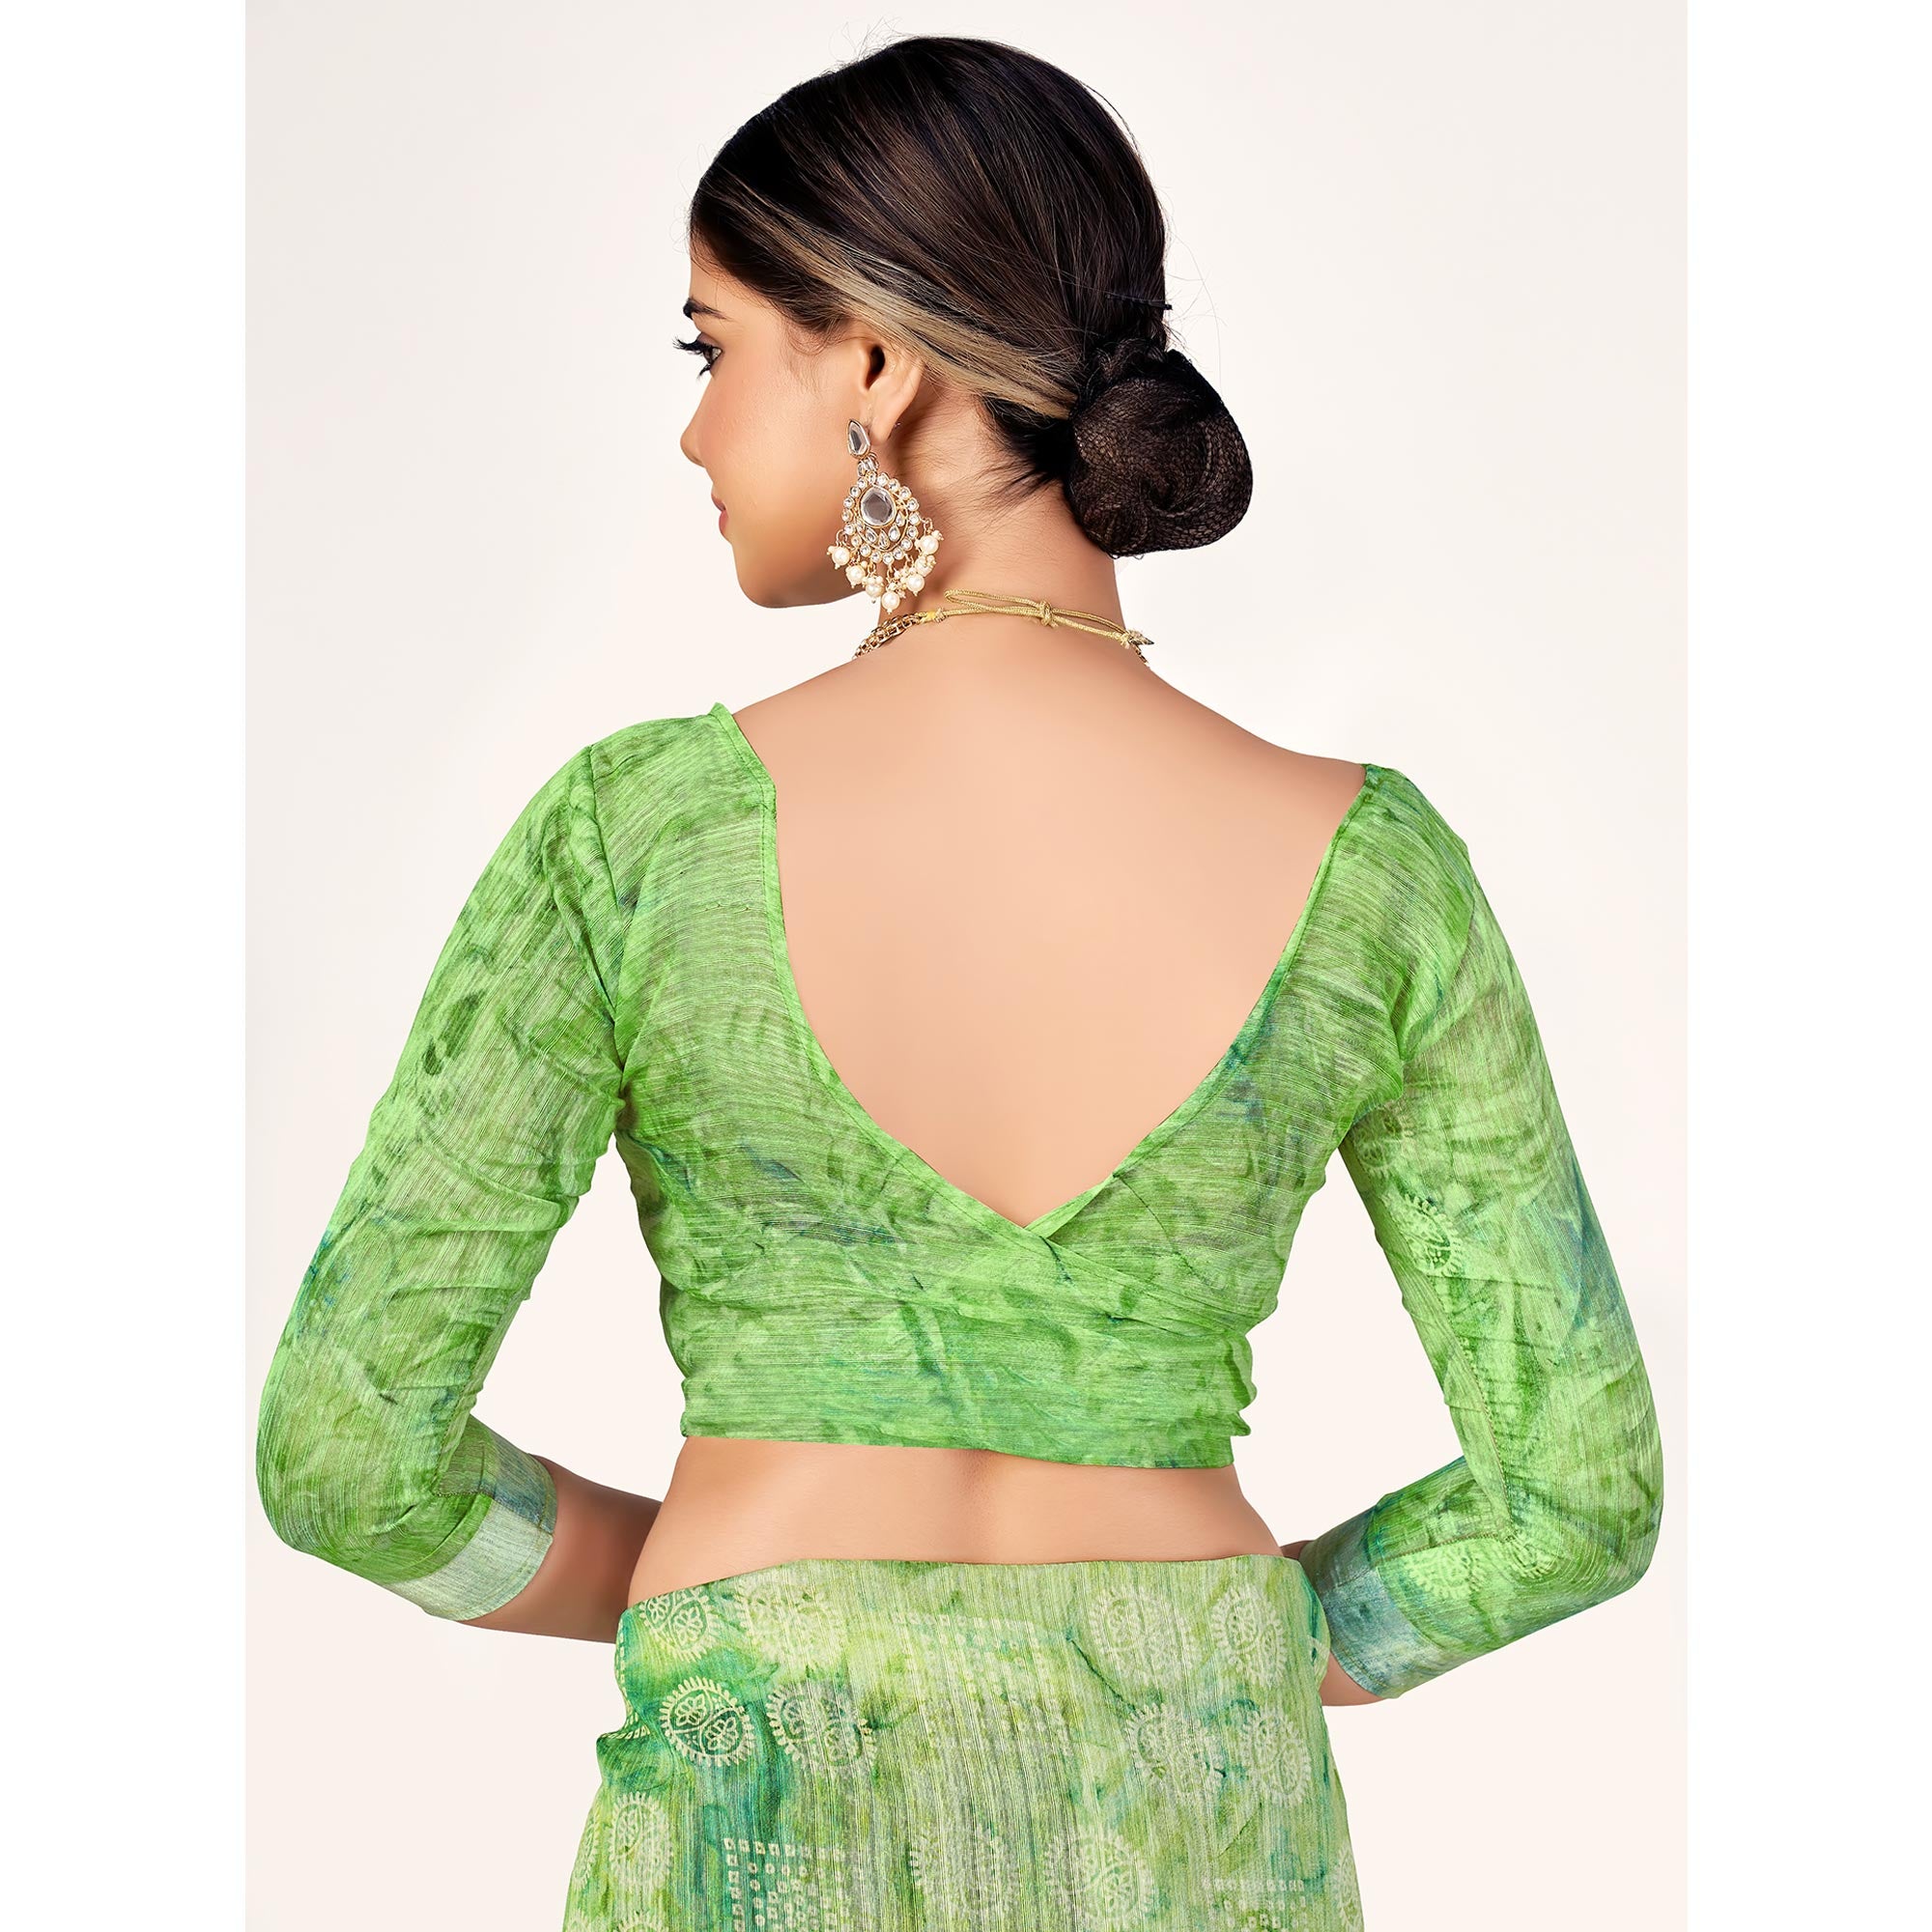 Pista Green Printed Cotton Silk Saree With Woven Border